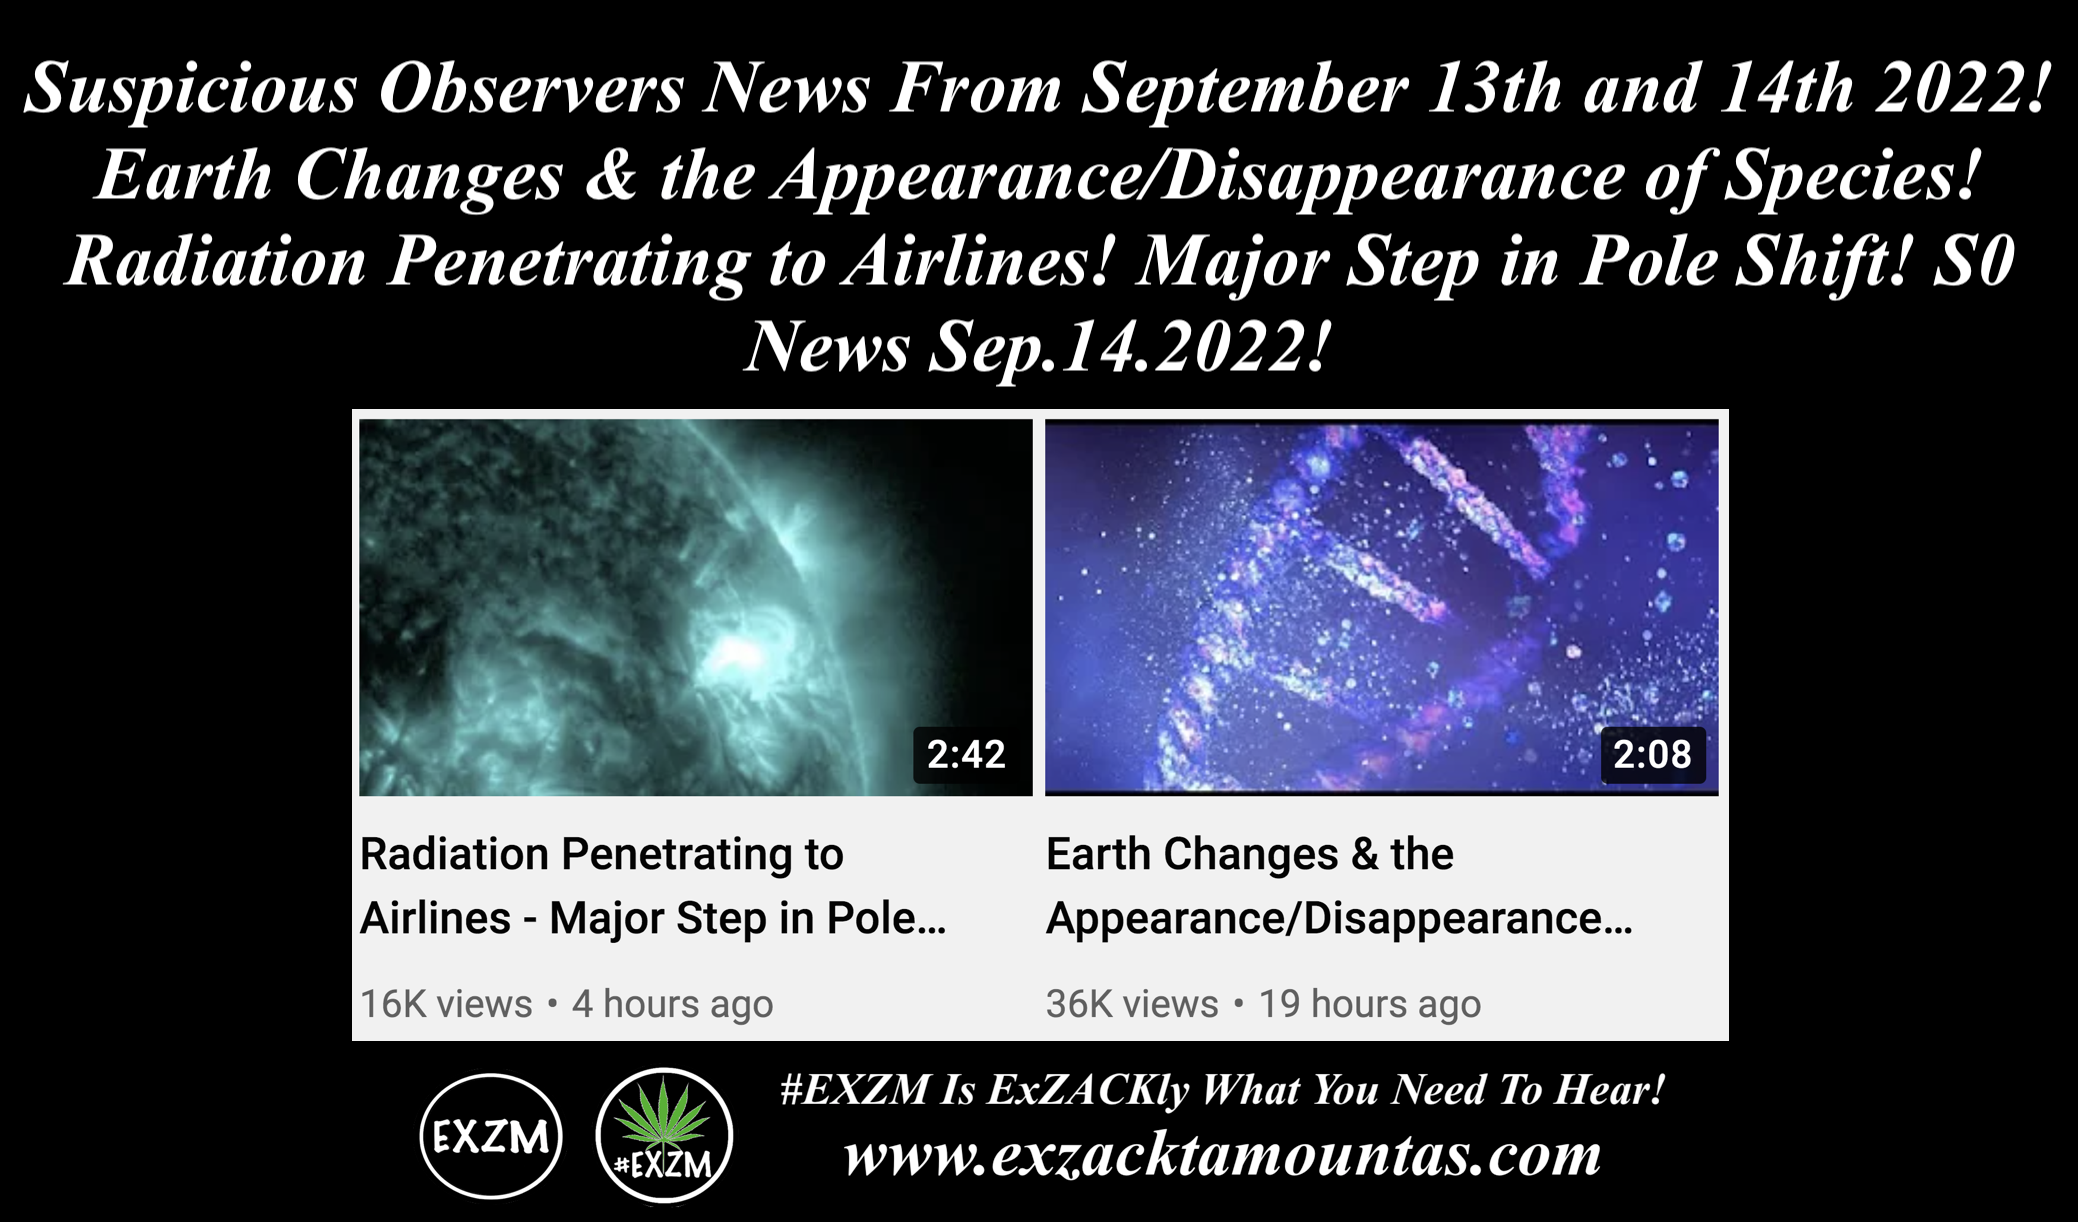 Suspicious Observers News September 13th 14th 2022 Magnetic Pole Shift The Great Reset Alex Jones Infowars EXZM exZACKtaMOUNTas Zack Mount September 14th 2022